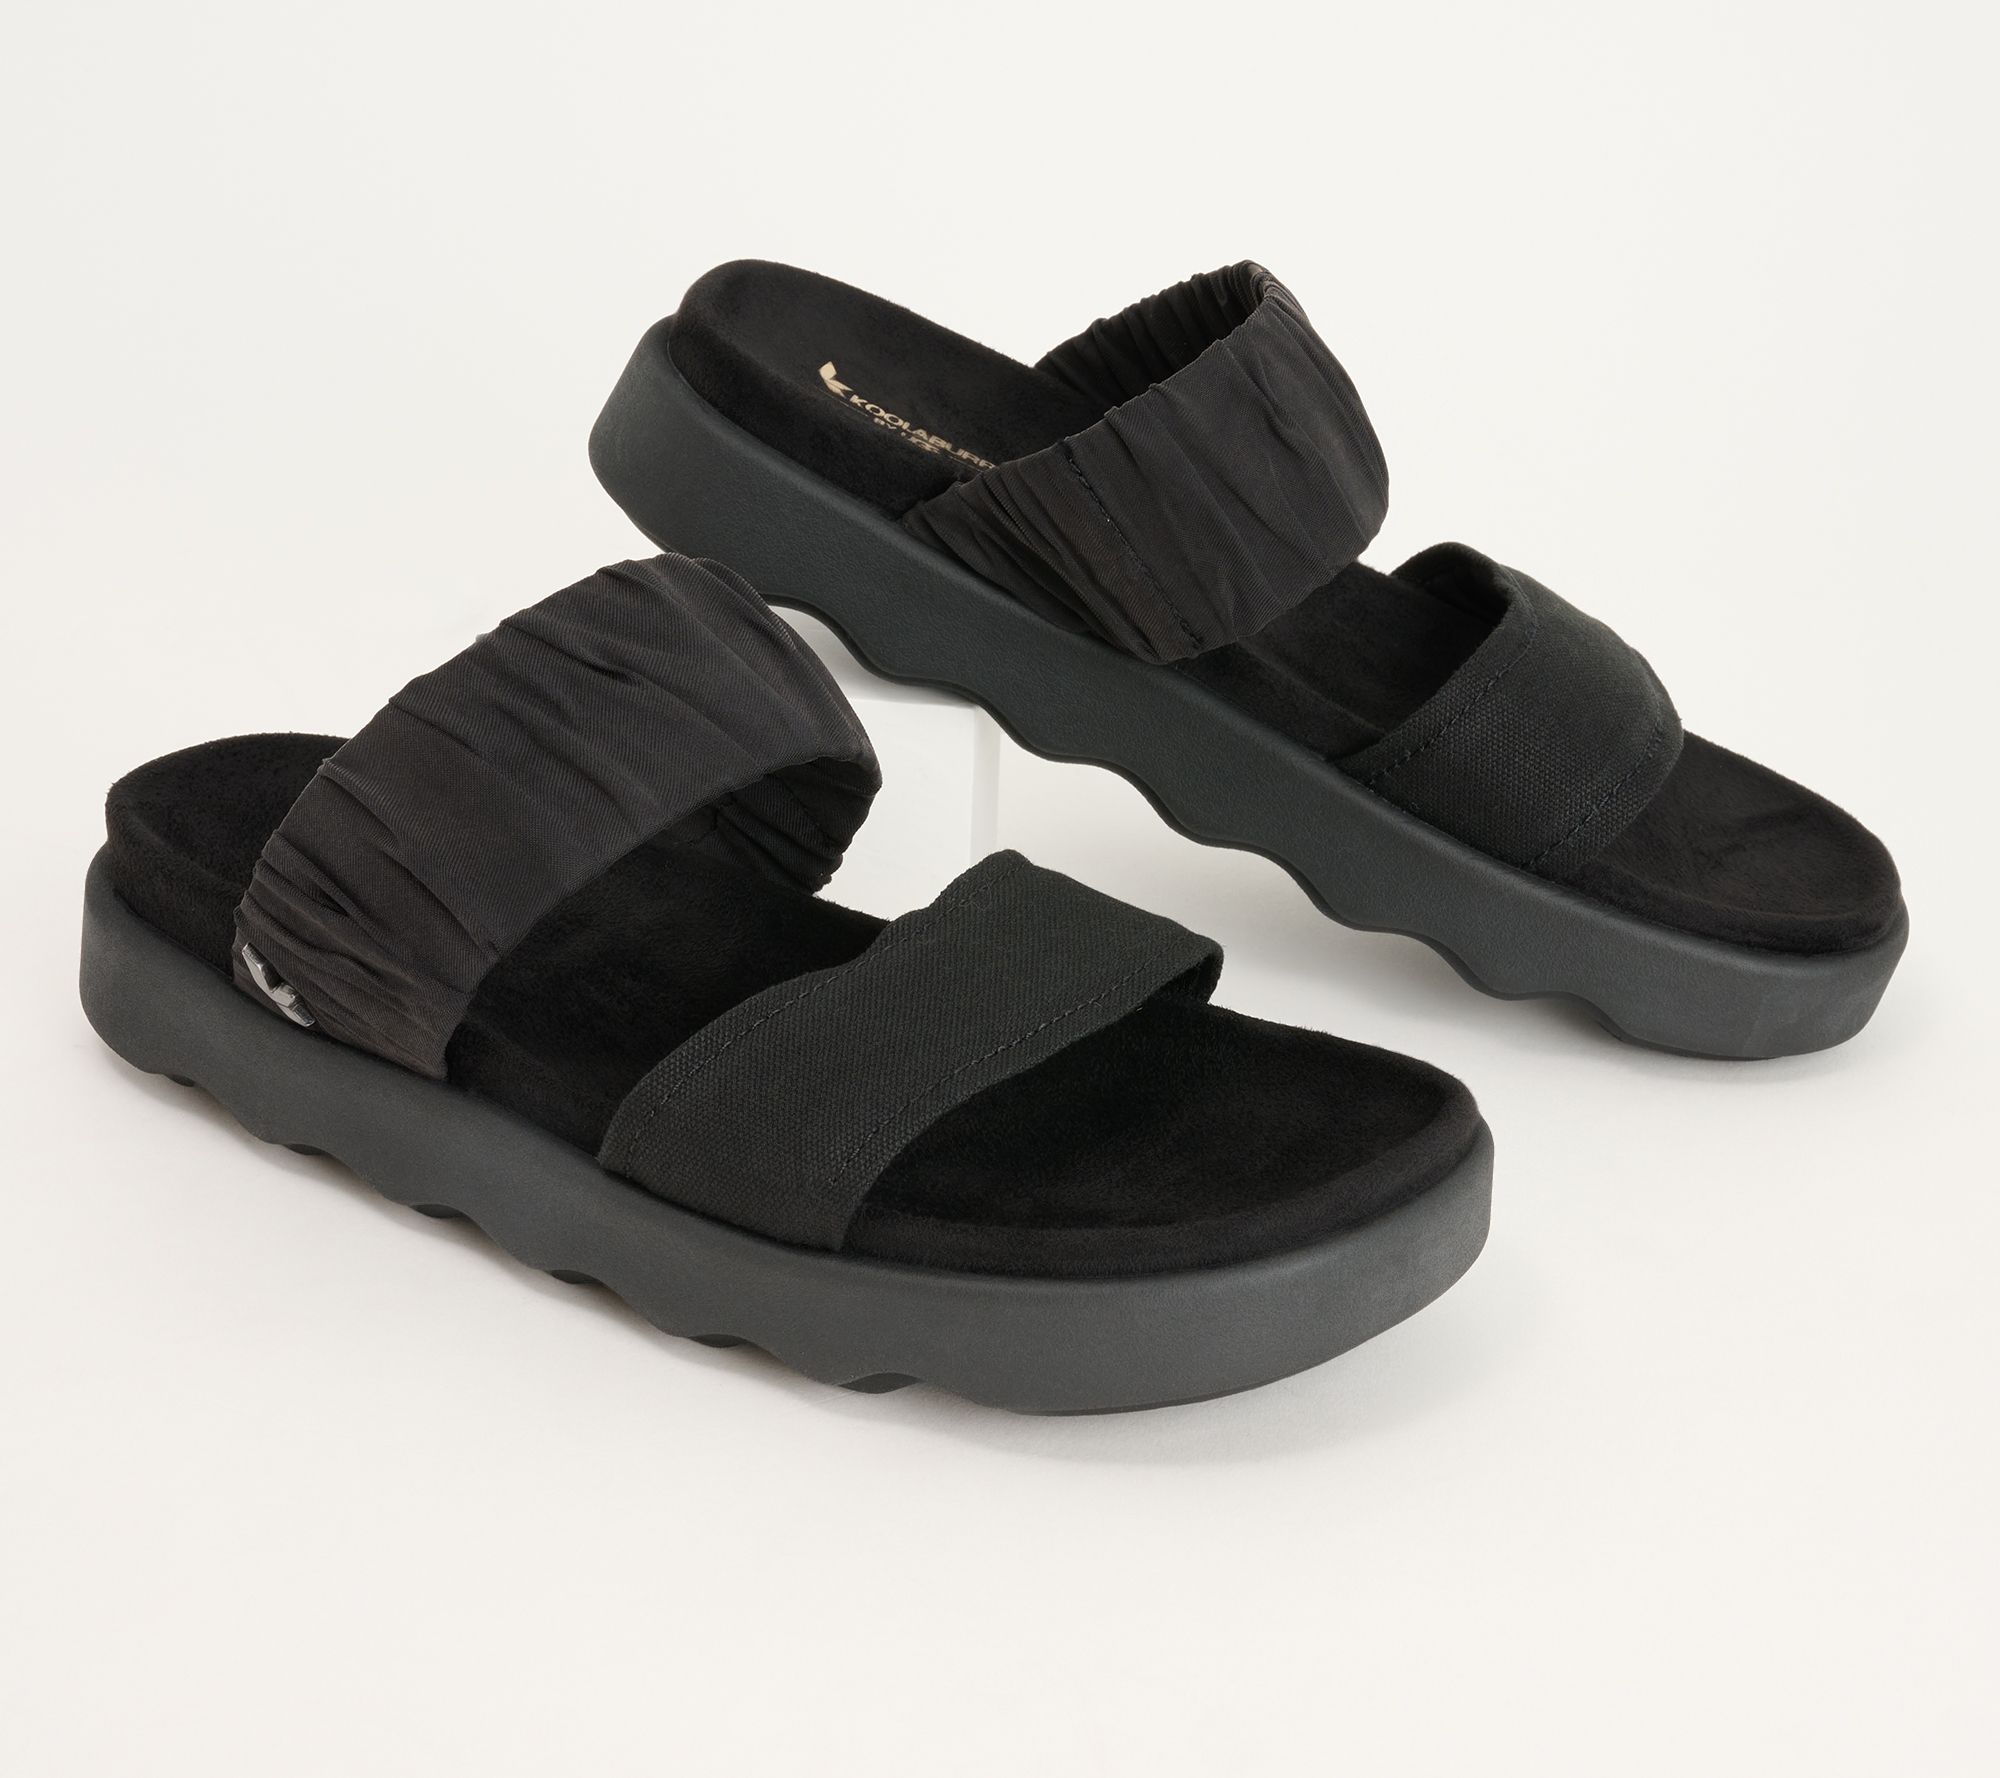 Koolaburra by UGG Double Band Slide Sandals - Talya - QVC.com